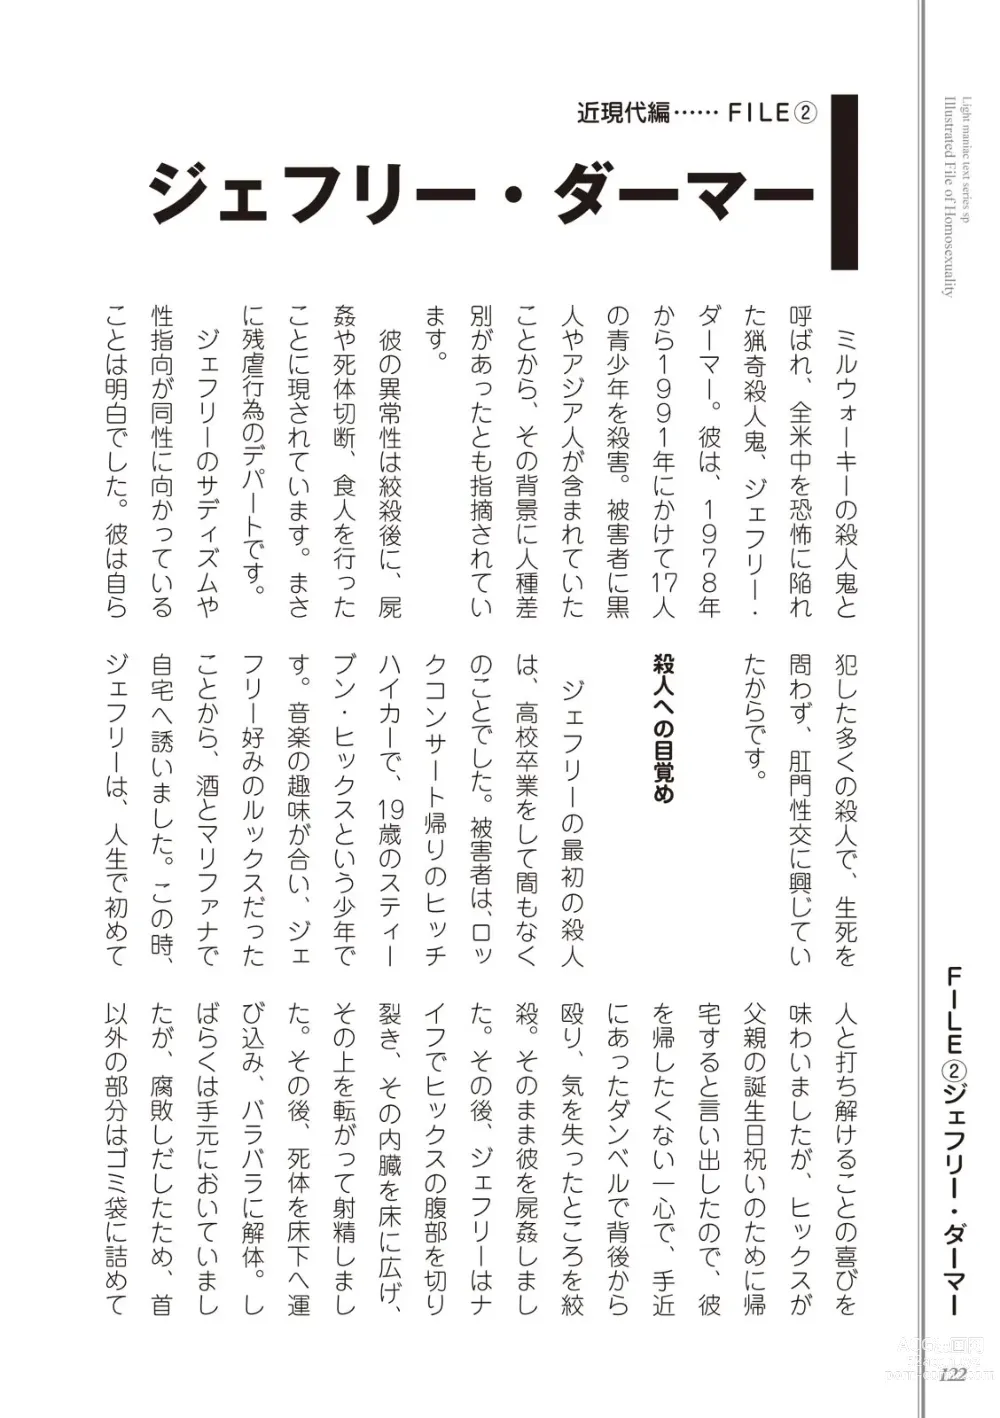 Page 124 of manga Kusa no Rekishi o Atsumete Mairimashita.  Oosame Kudasai - Light maniac text series sp Illustrated File of Homosexuality